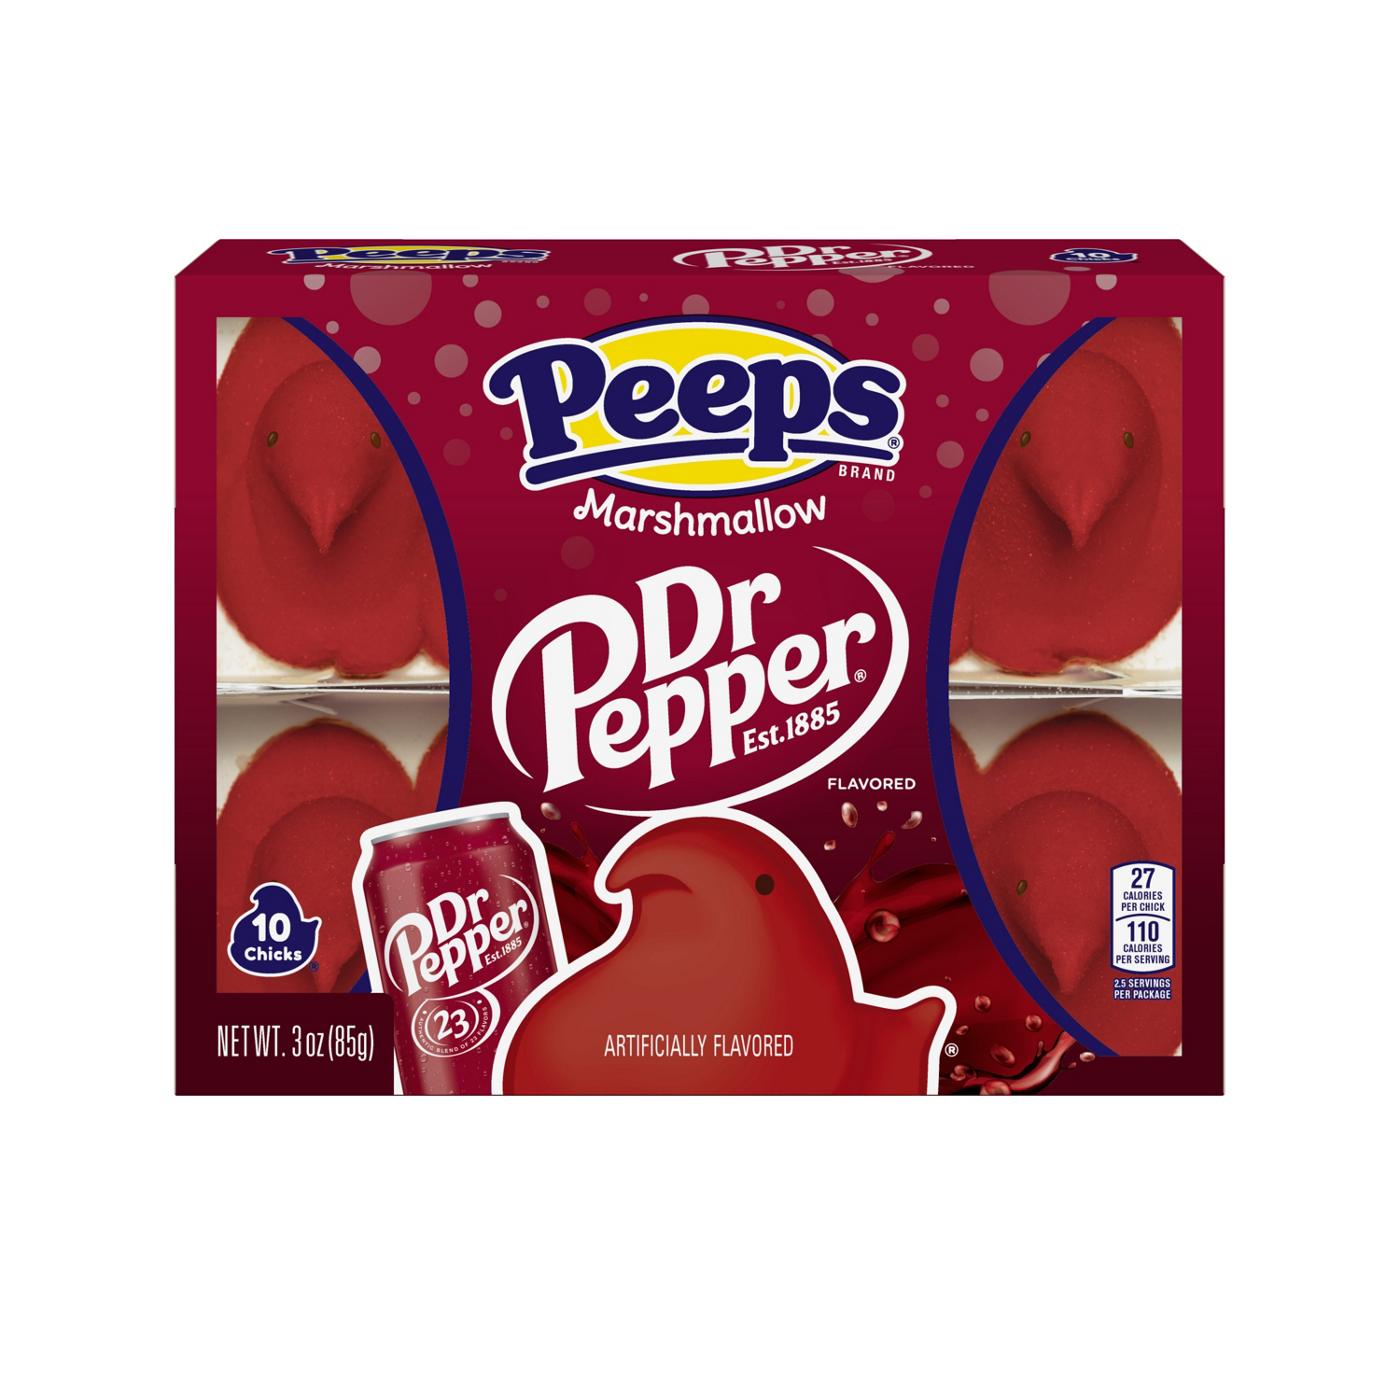 Peeps Dr. Pepper Flavor Easter Marshmallow Chicks; image 1 of 2